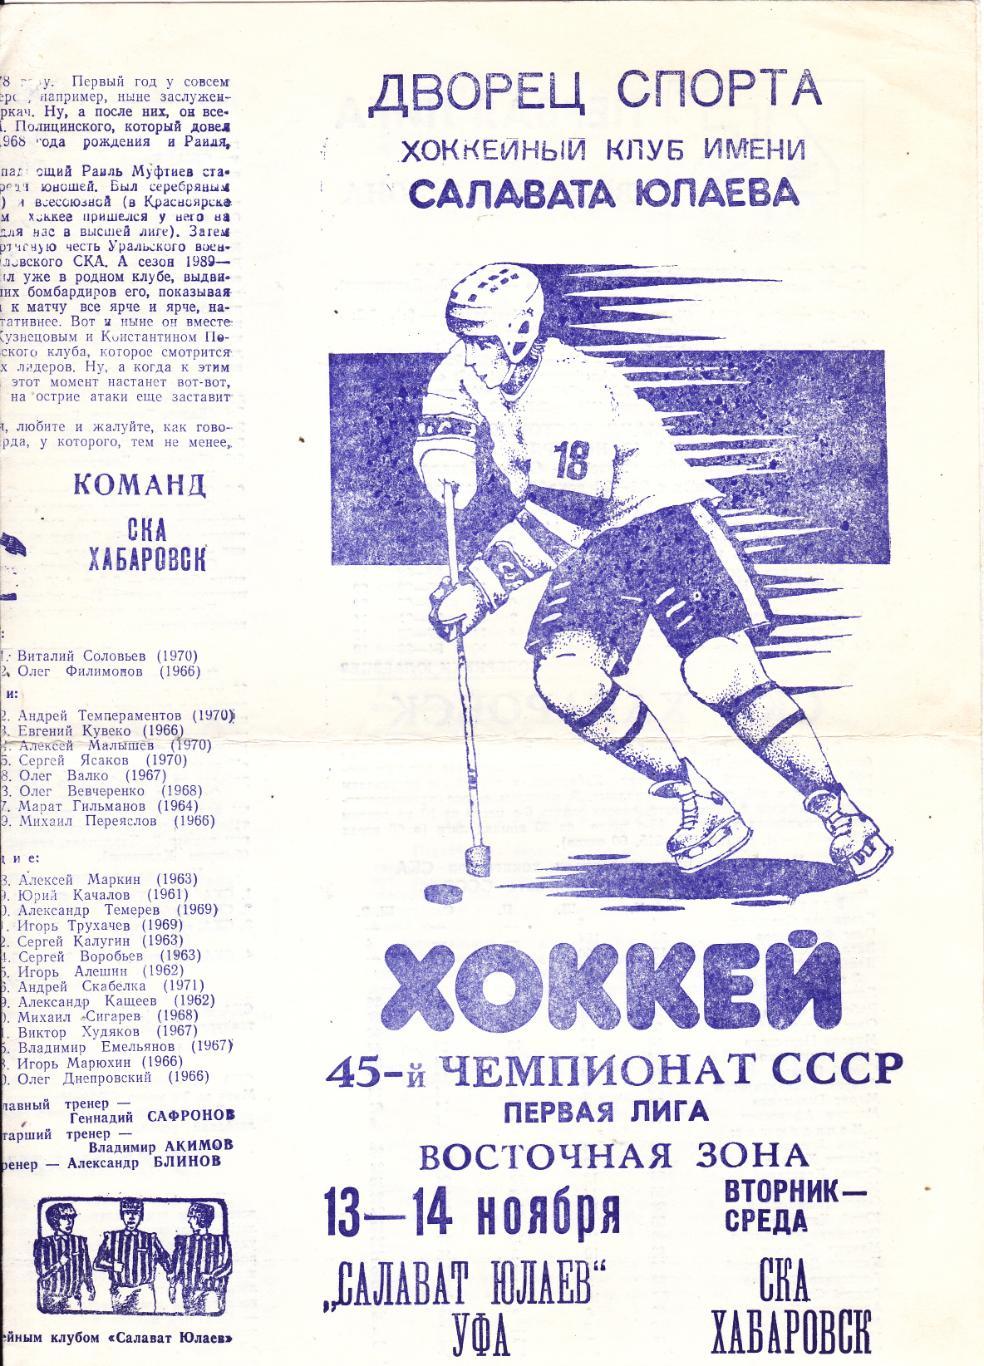 Салават Юлаев (Уфа) - СКА (Хабаровск) 13-14.11.1990